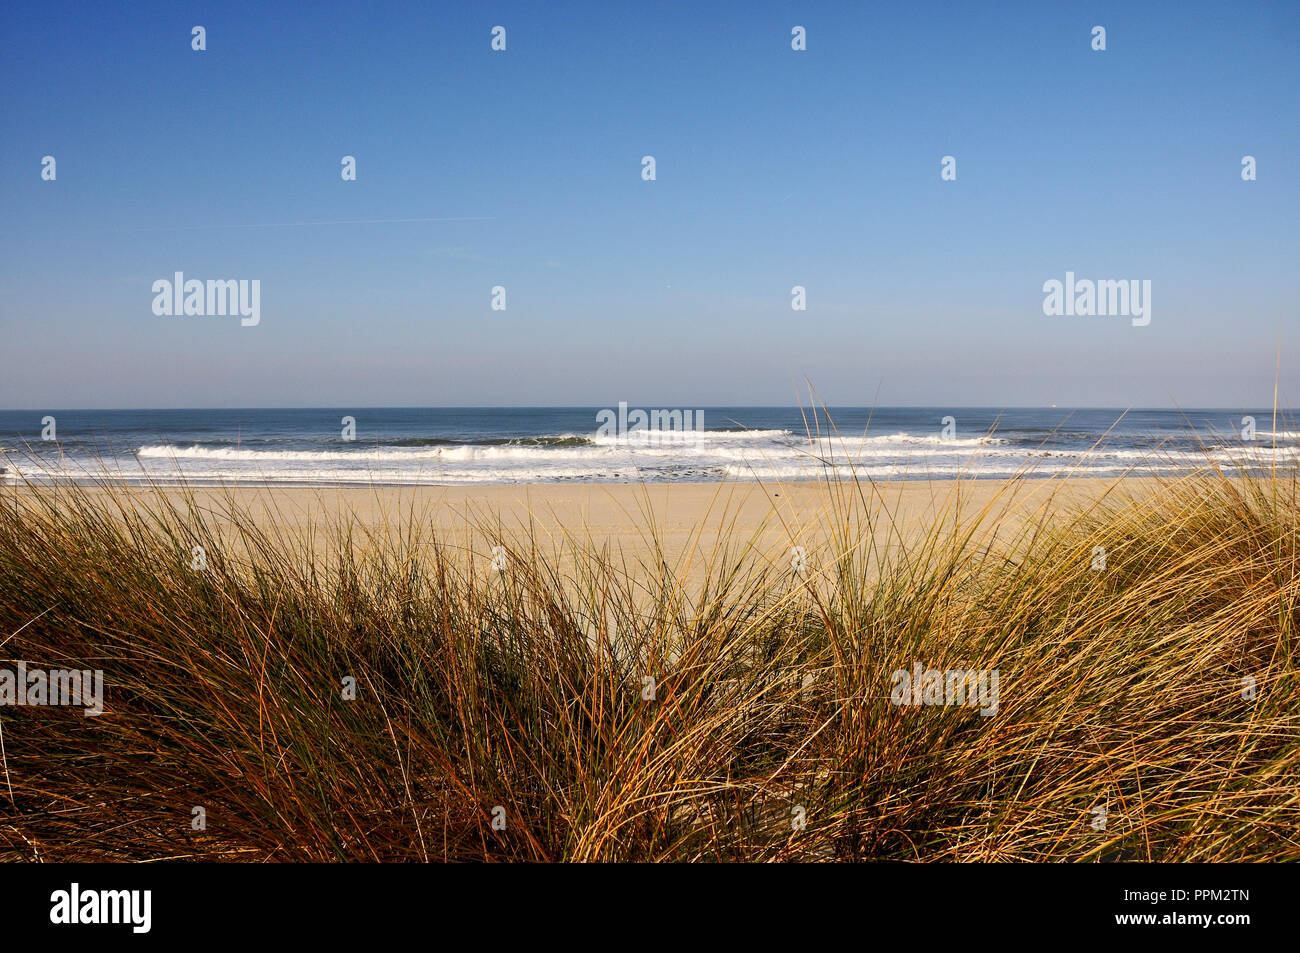 The beach of Costa Nova with sand dunes and European beachgrass, Portugal Stock Photo